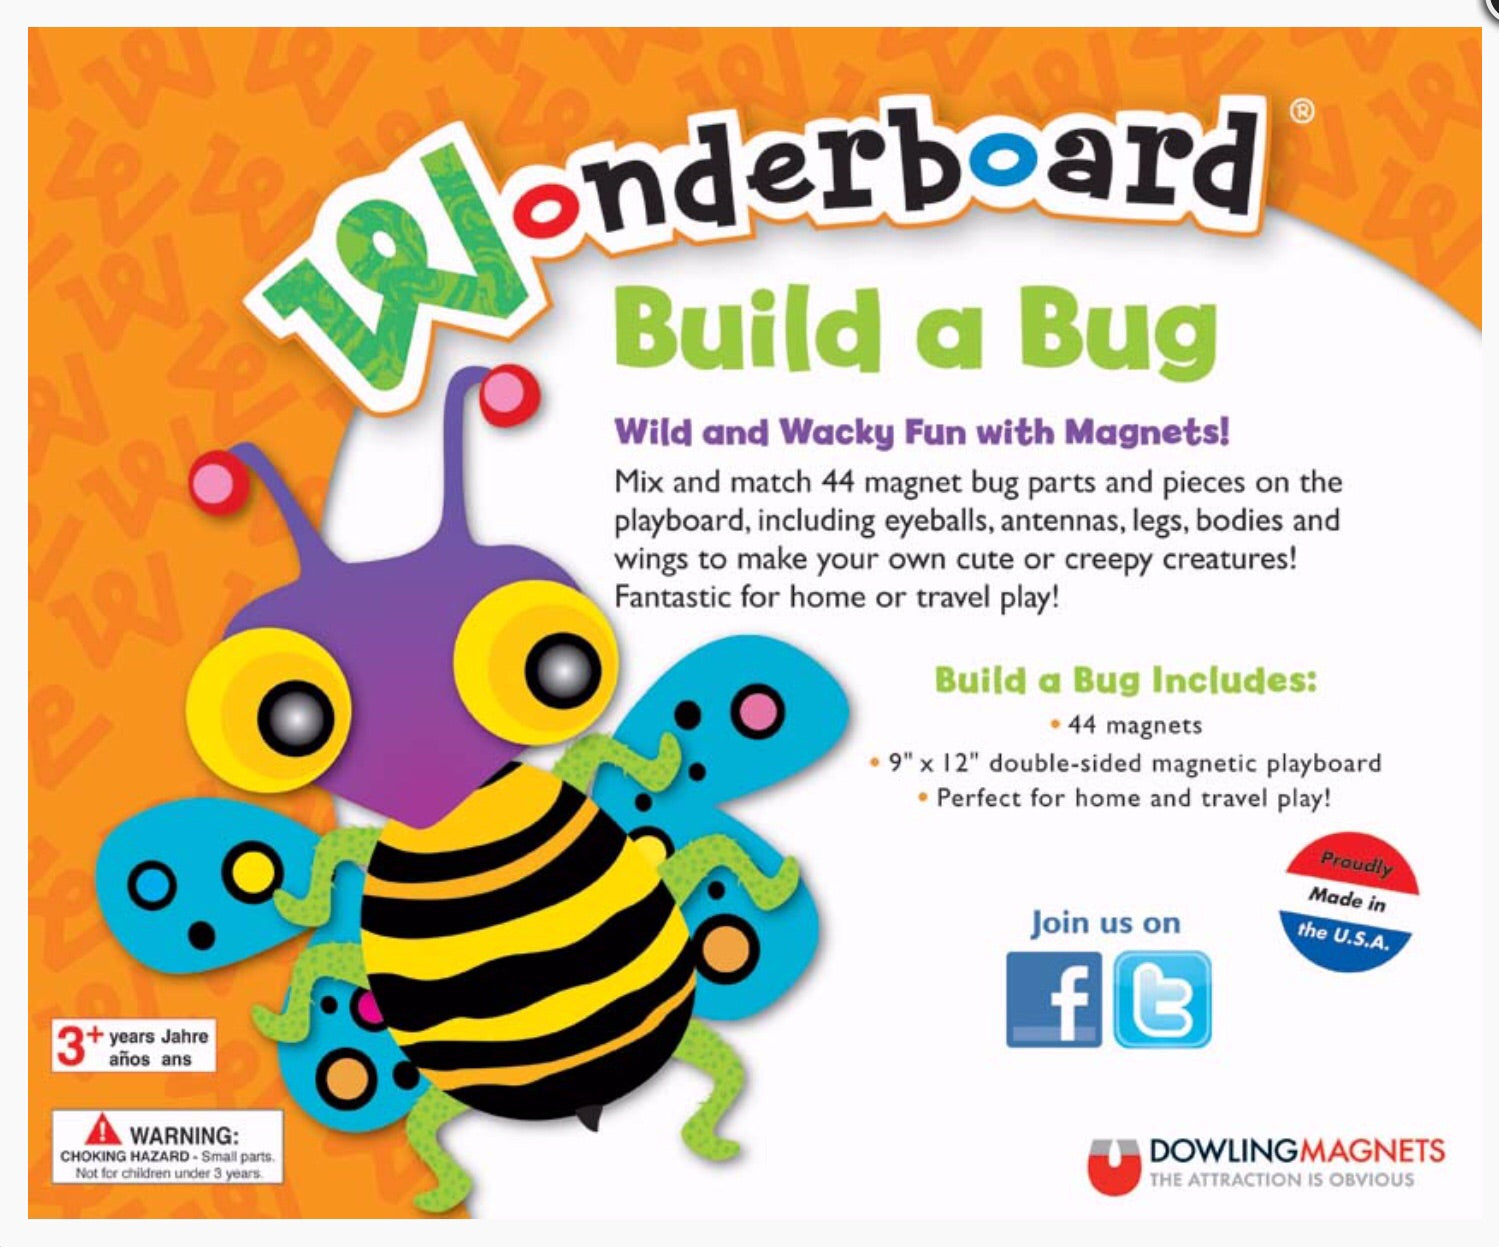 Wonderboard: Build A Bug